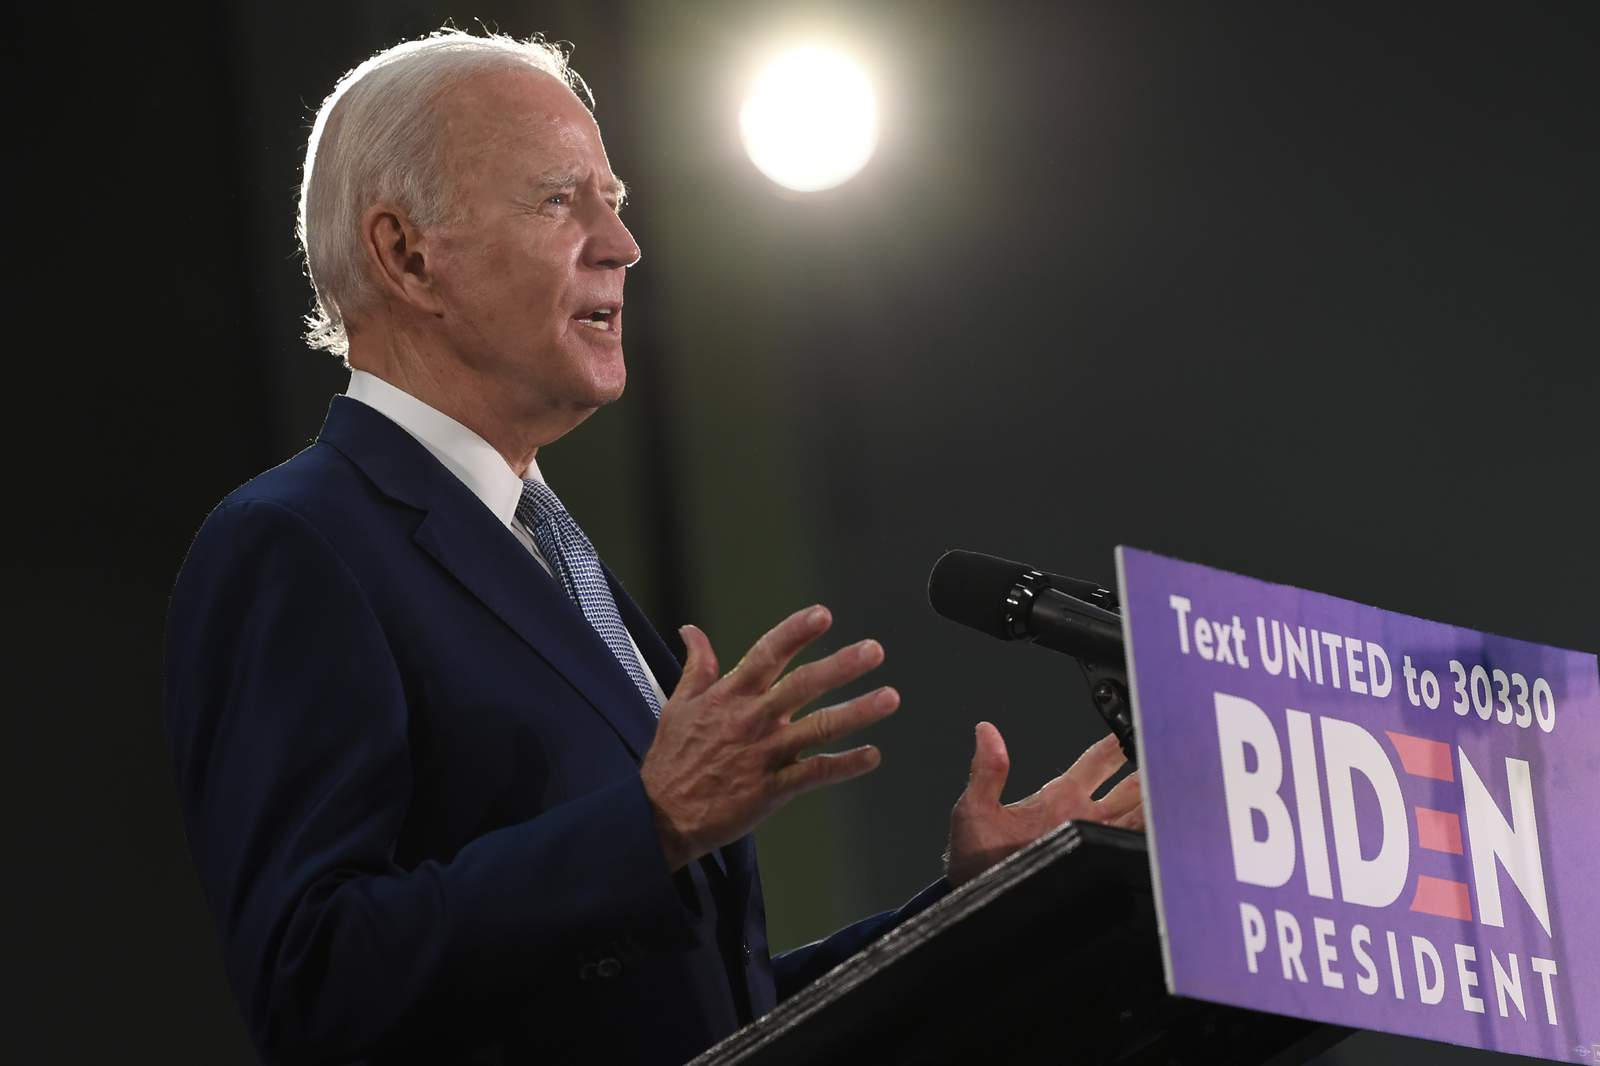 Biden formally clinches Democratic presidential nomination